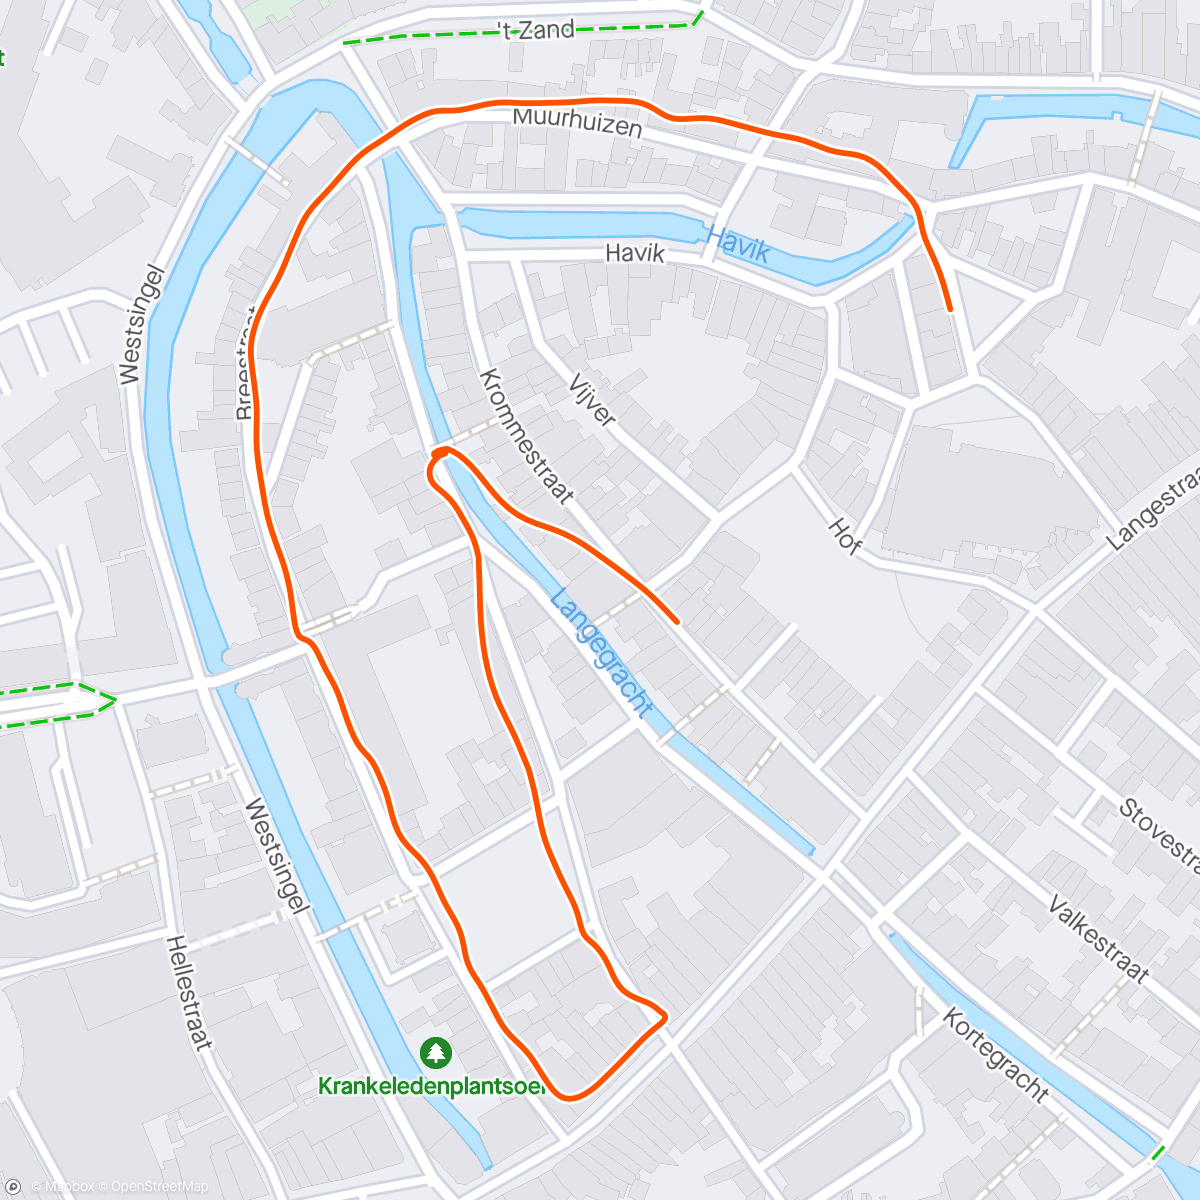 「Koningnachtsrun」活動的地圖